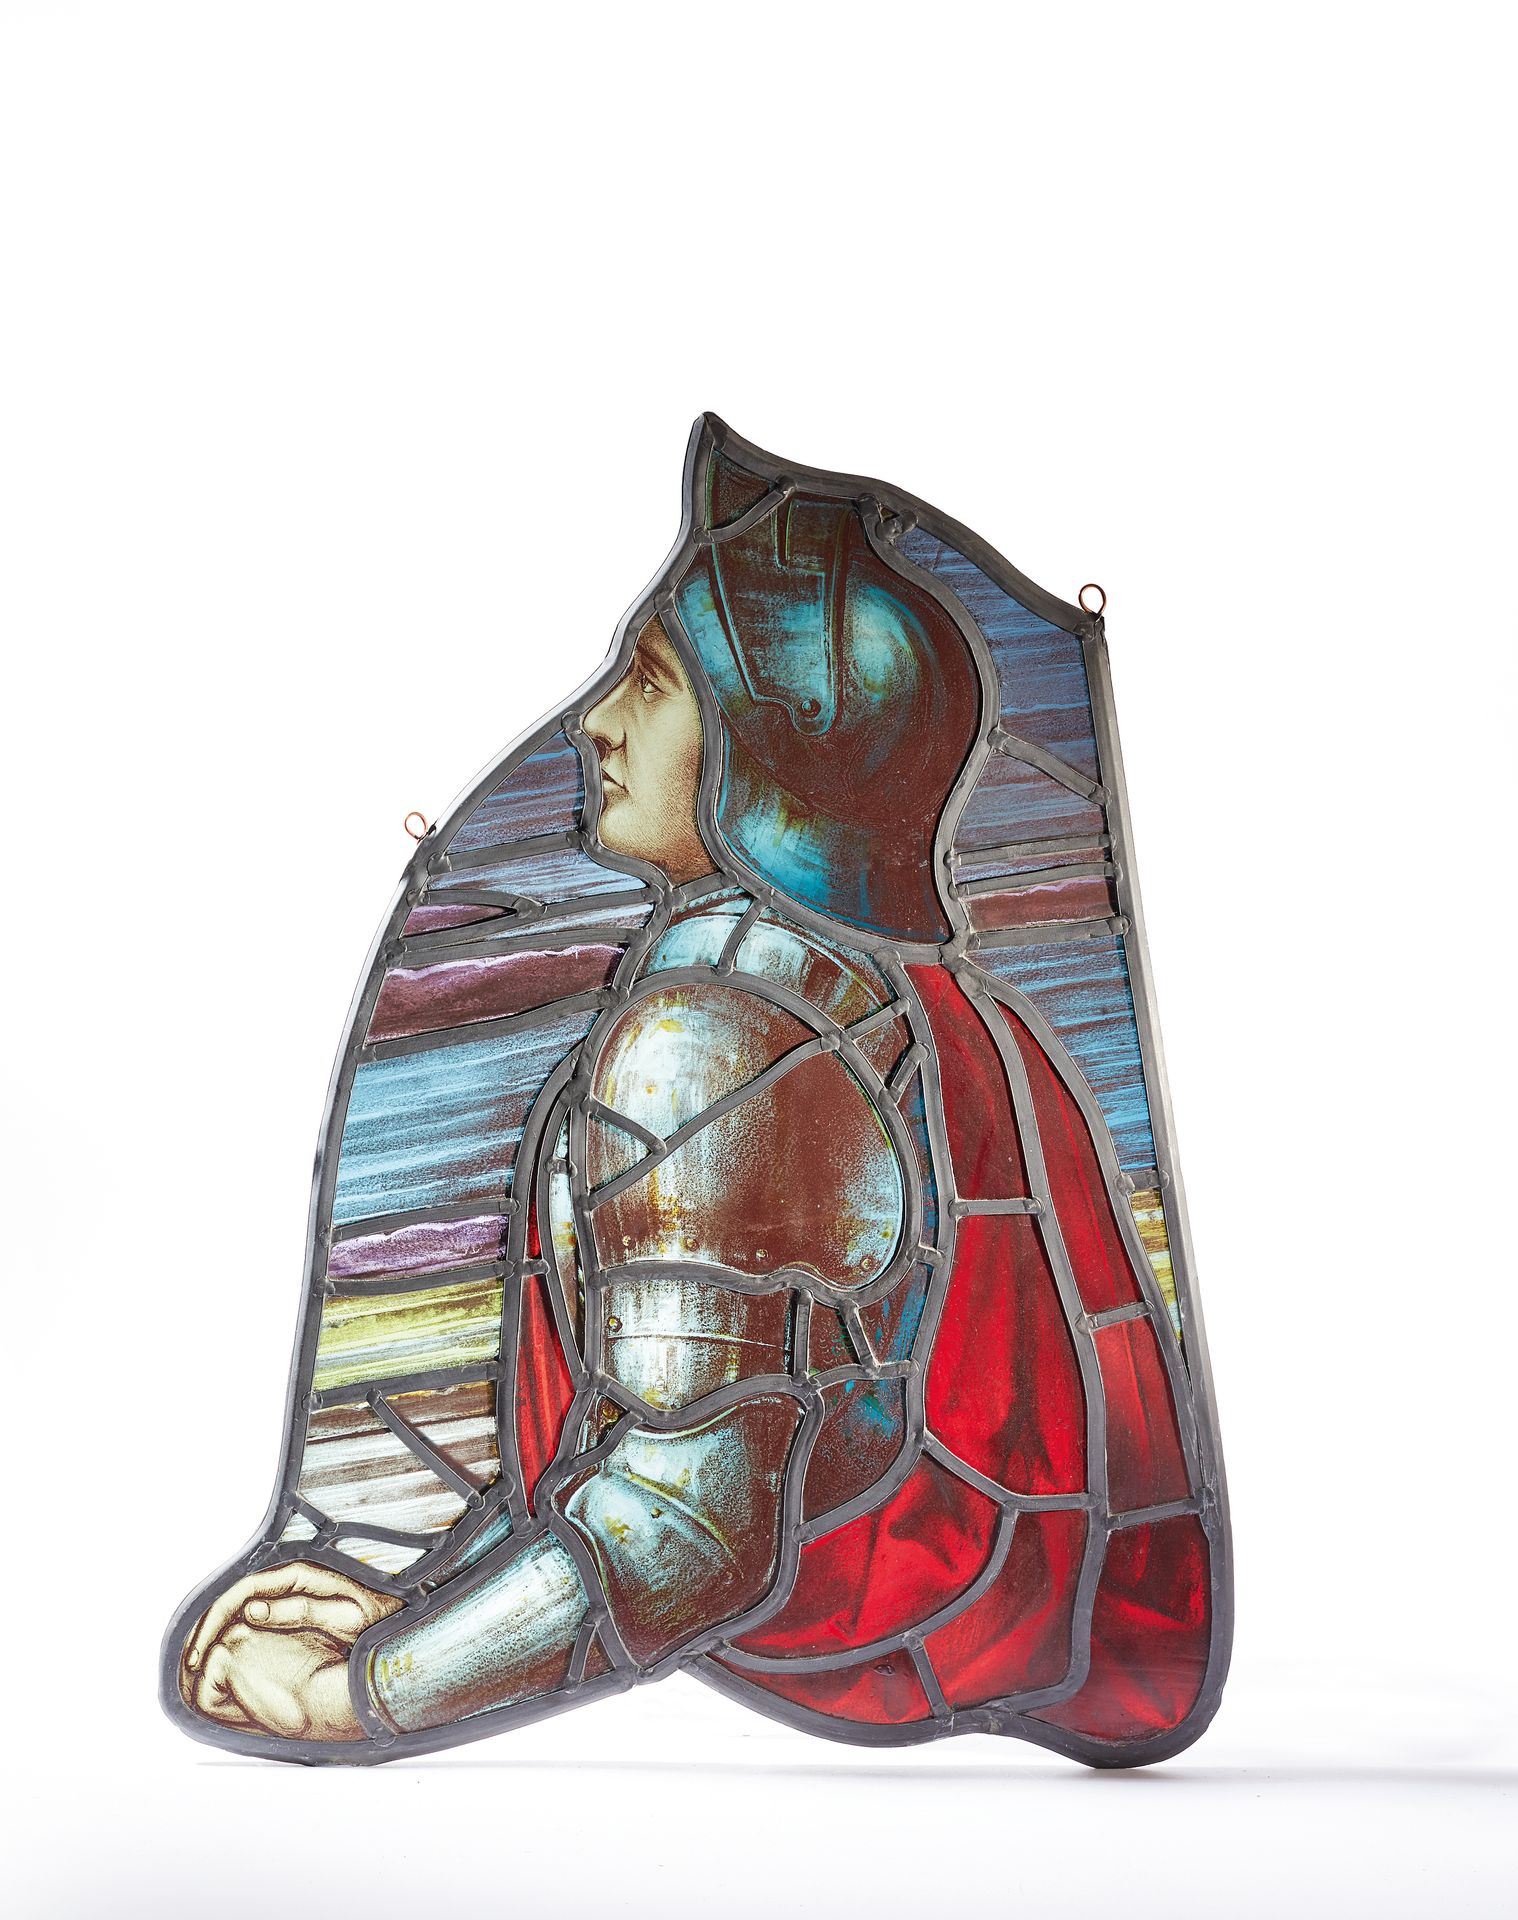 Null 显示圣女贞德身着盔甲和半身像的彩色玻璃窗。

19-20世纪。

高度61 - 宽度49厘米